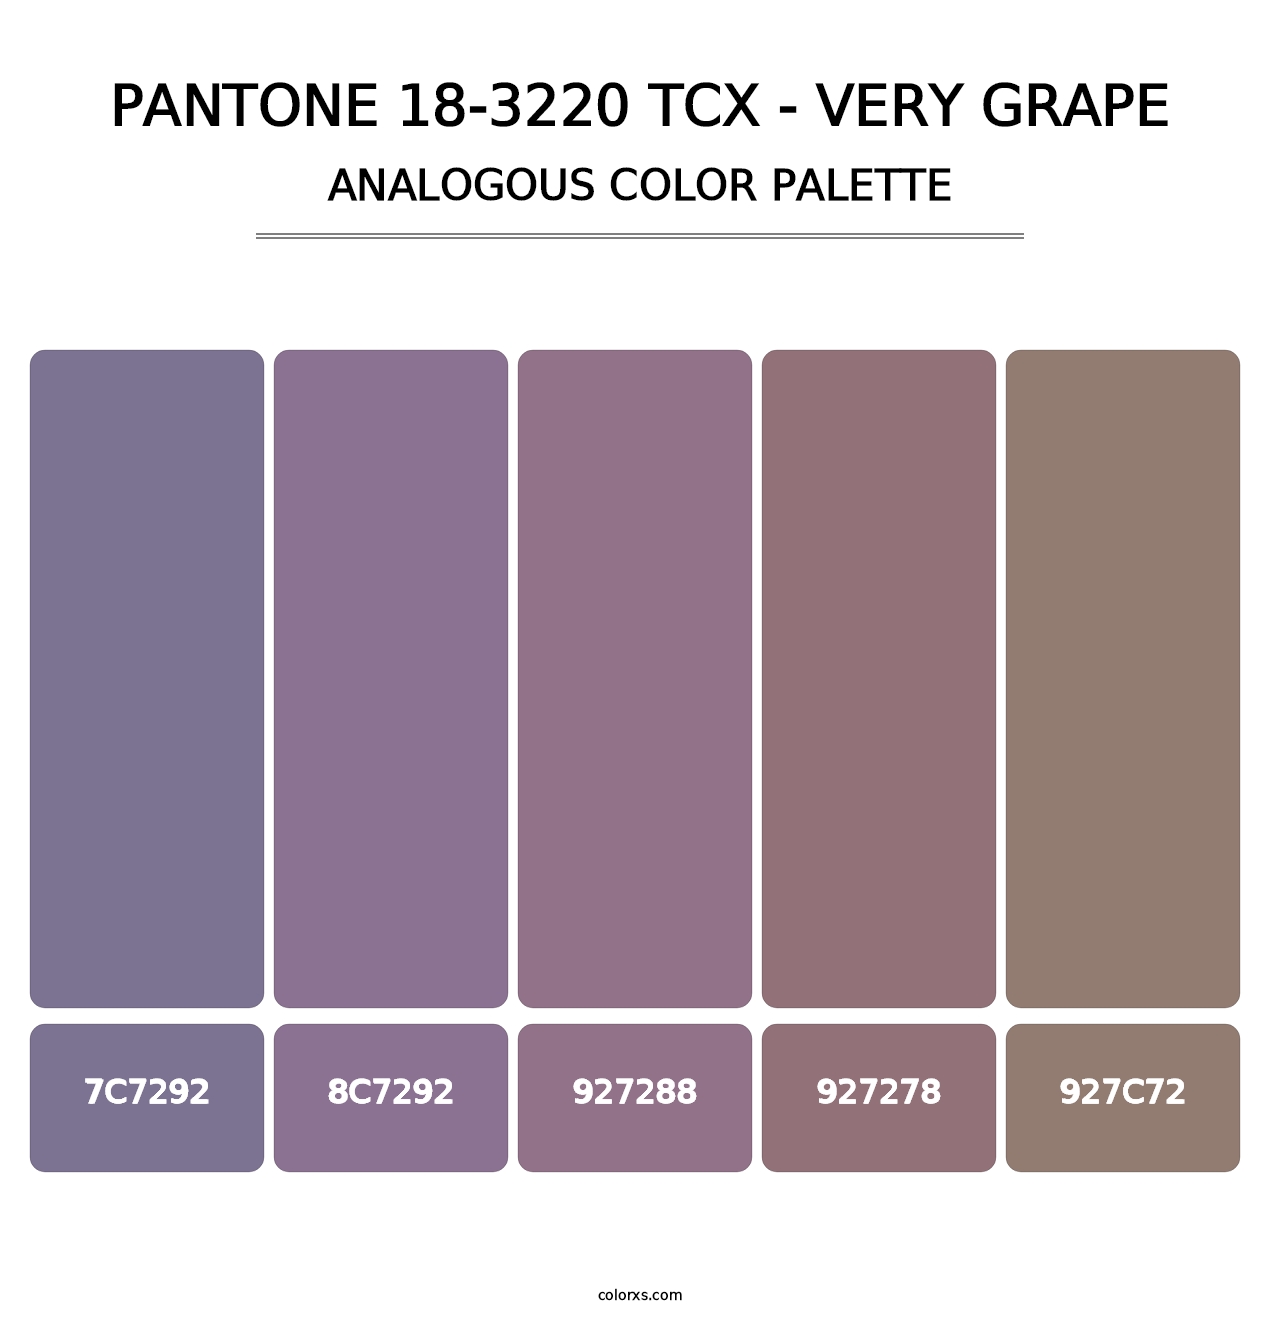 PANTONE 18-3220 TCX - Very Grape - Analogous Color Palette